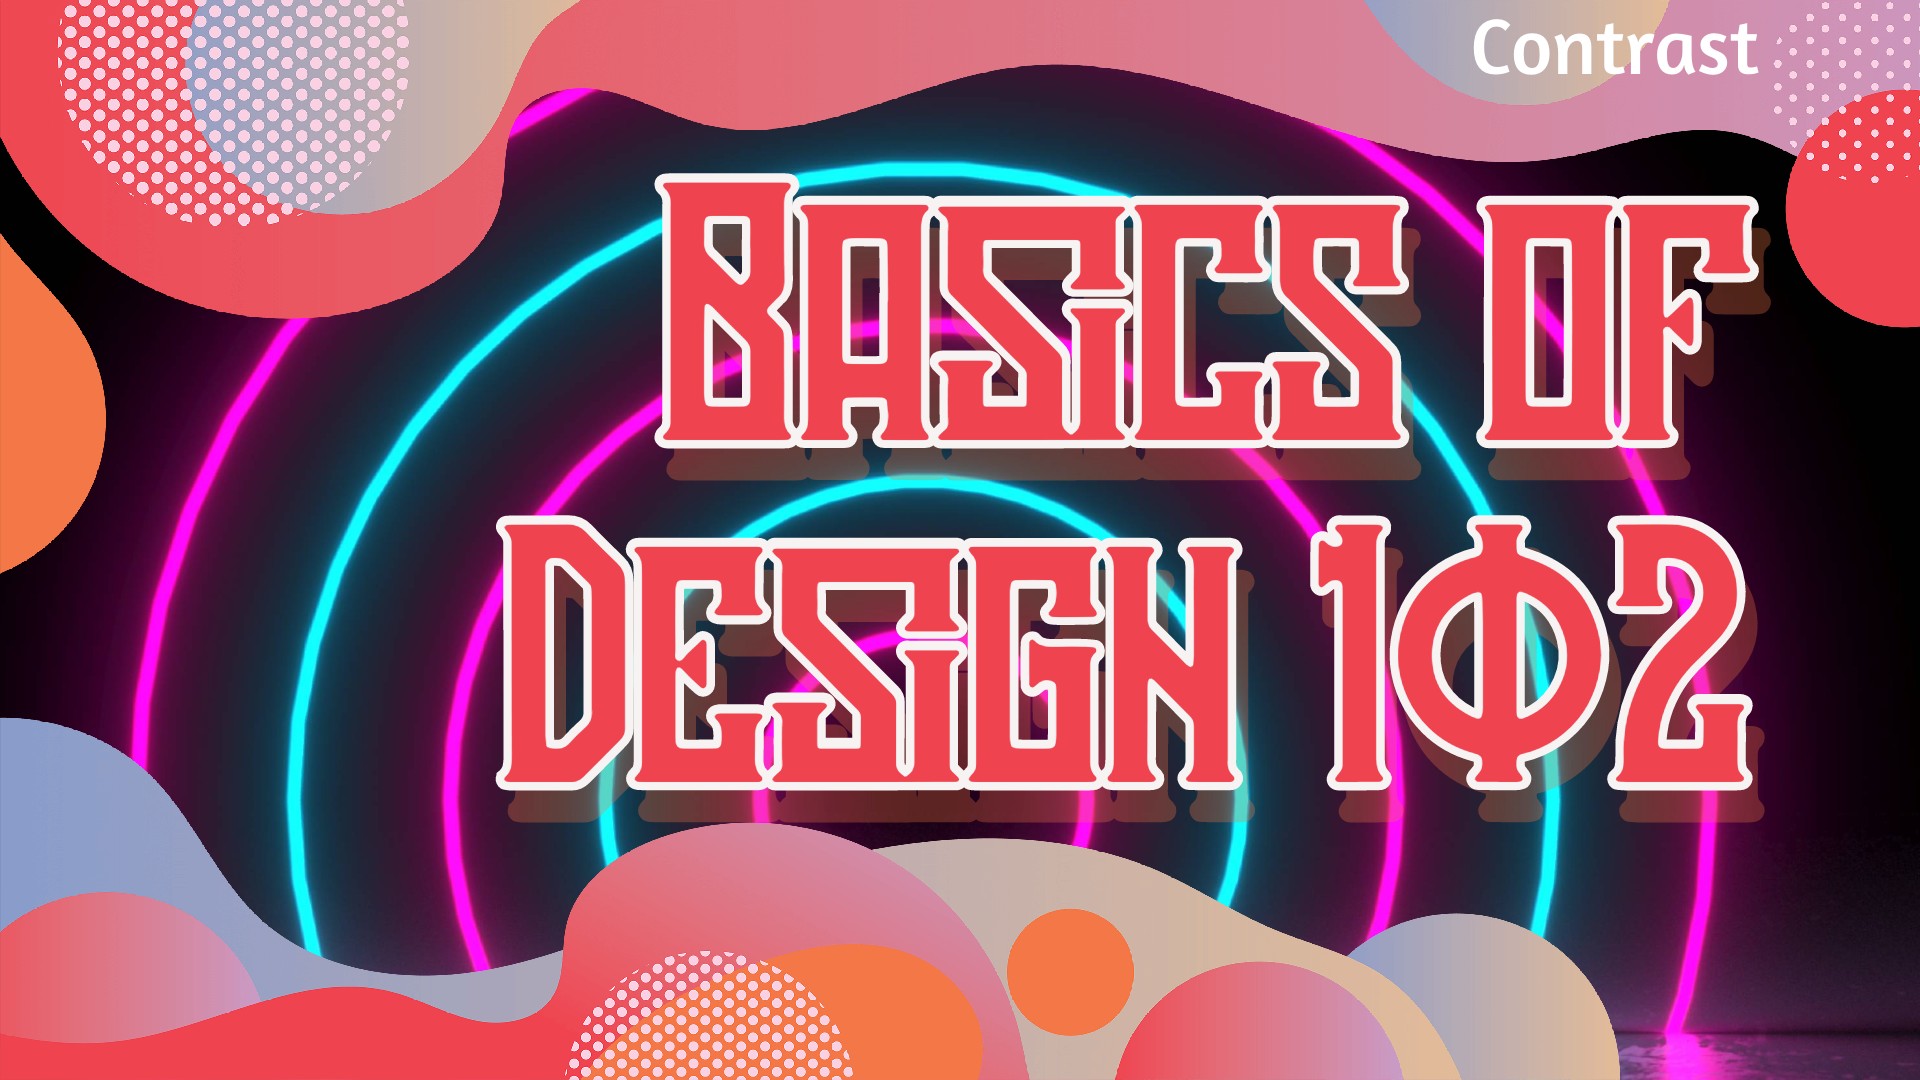 Basics of Design 102: Contrast